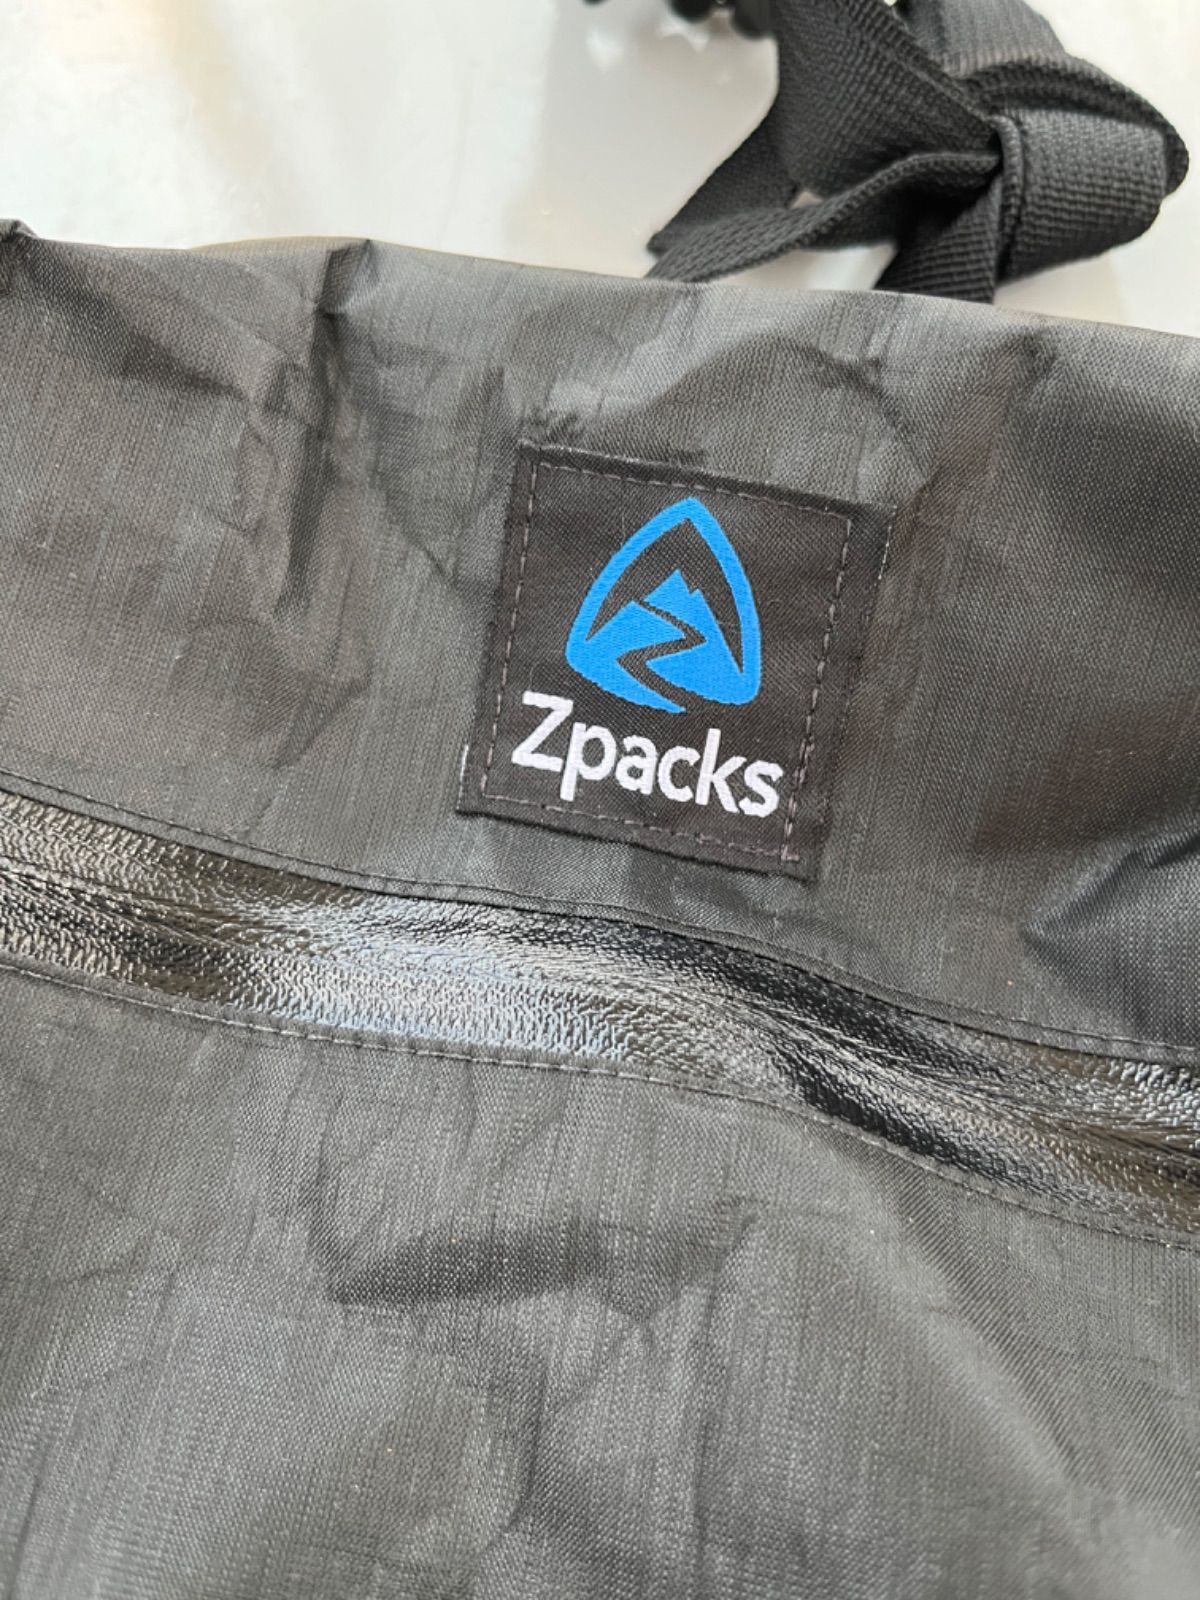 Zpacks Multi-Pack / Zパック マルチパック - メルカリ